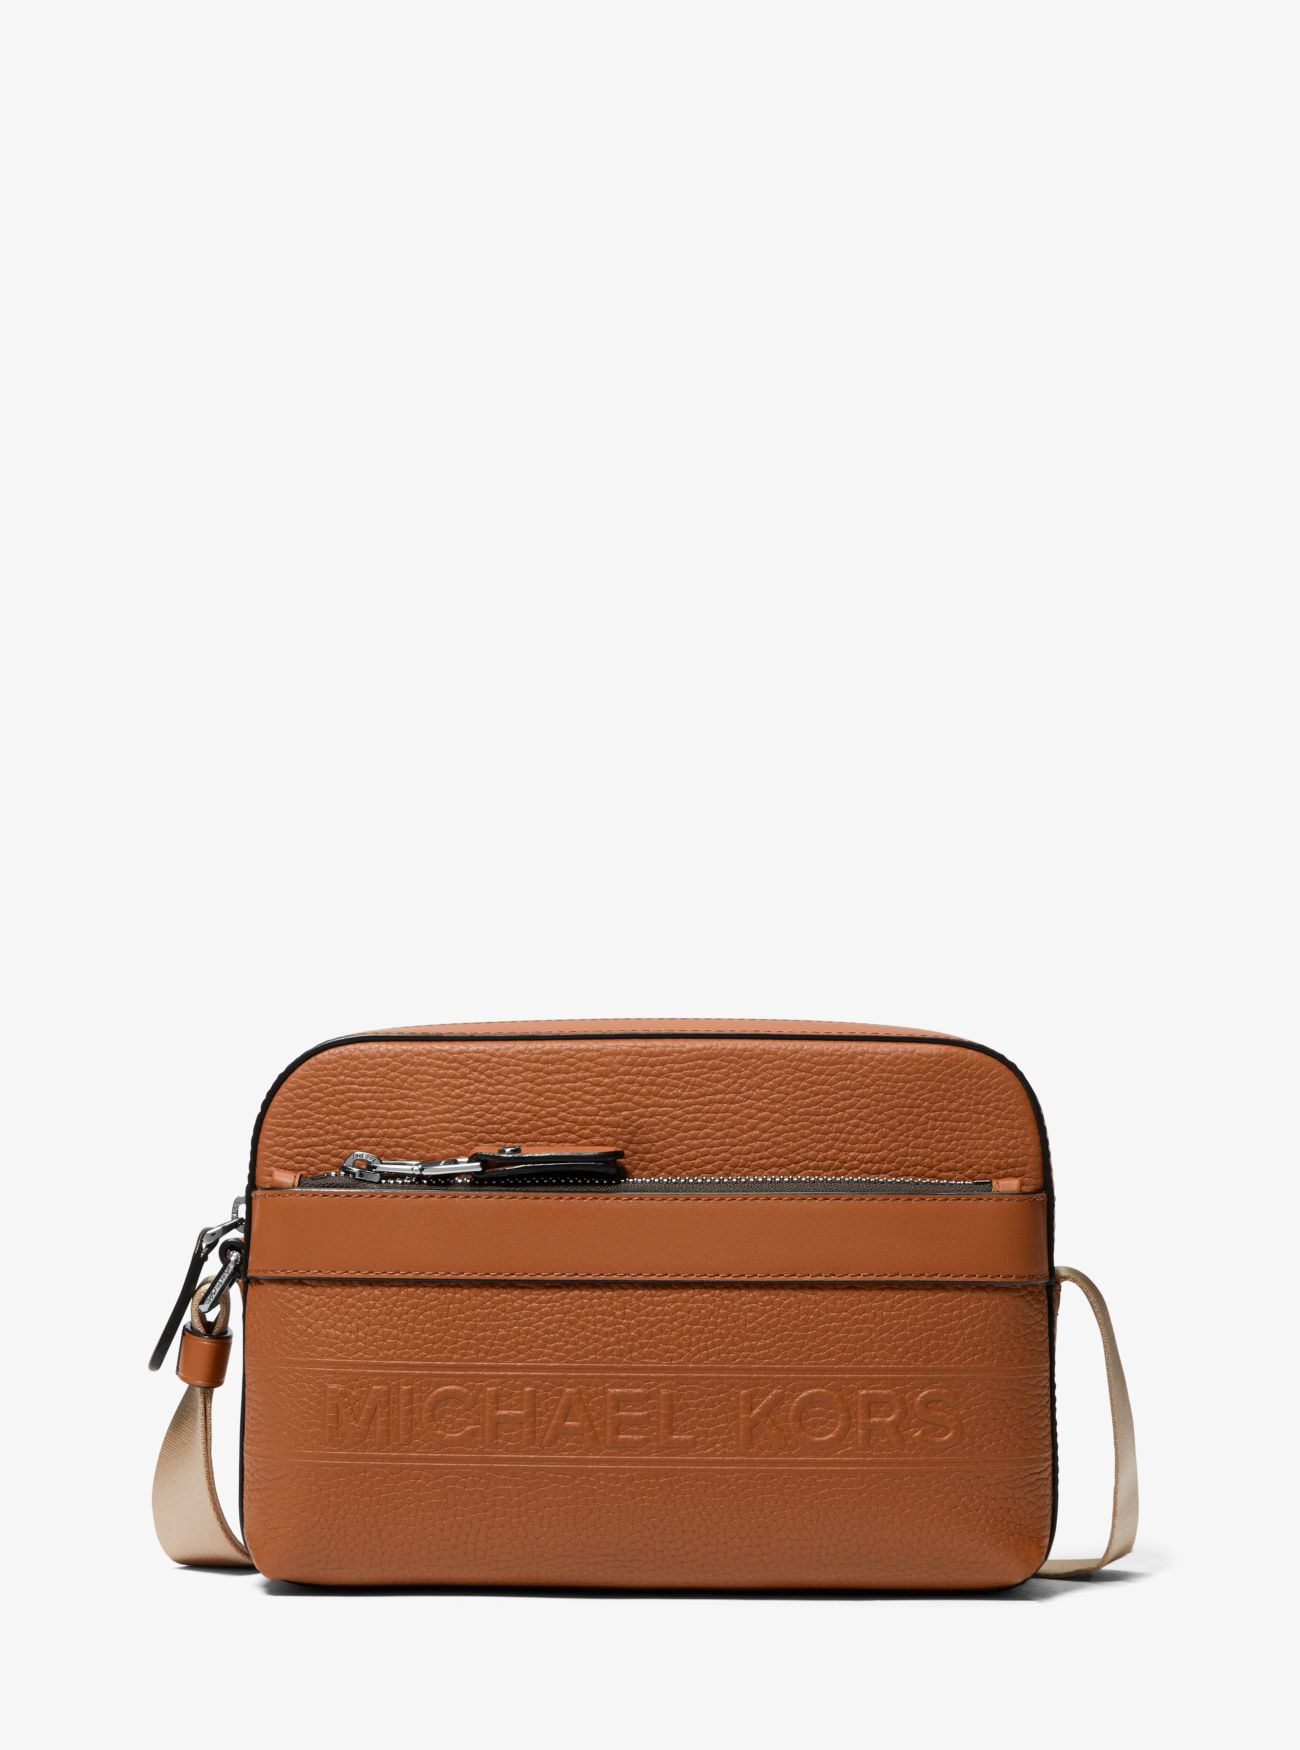 MK Hudson Pebbled Leather Utility Crossbody Bag - Brown - Michael Kors